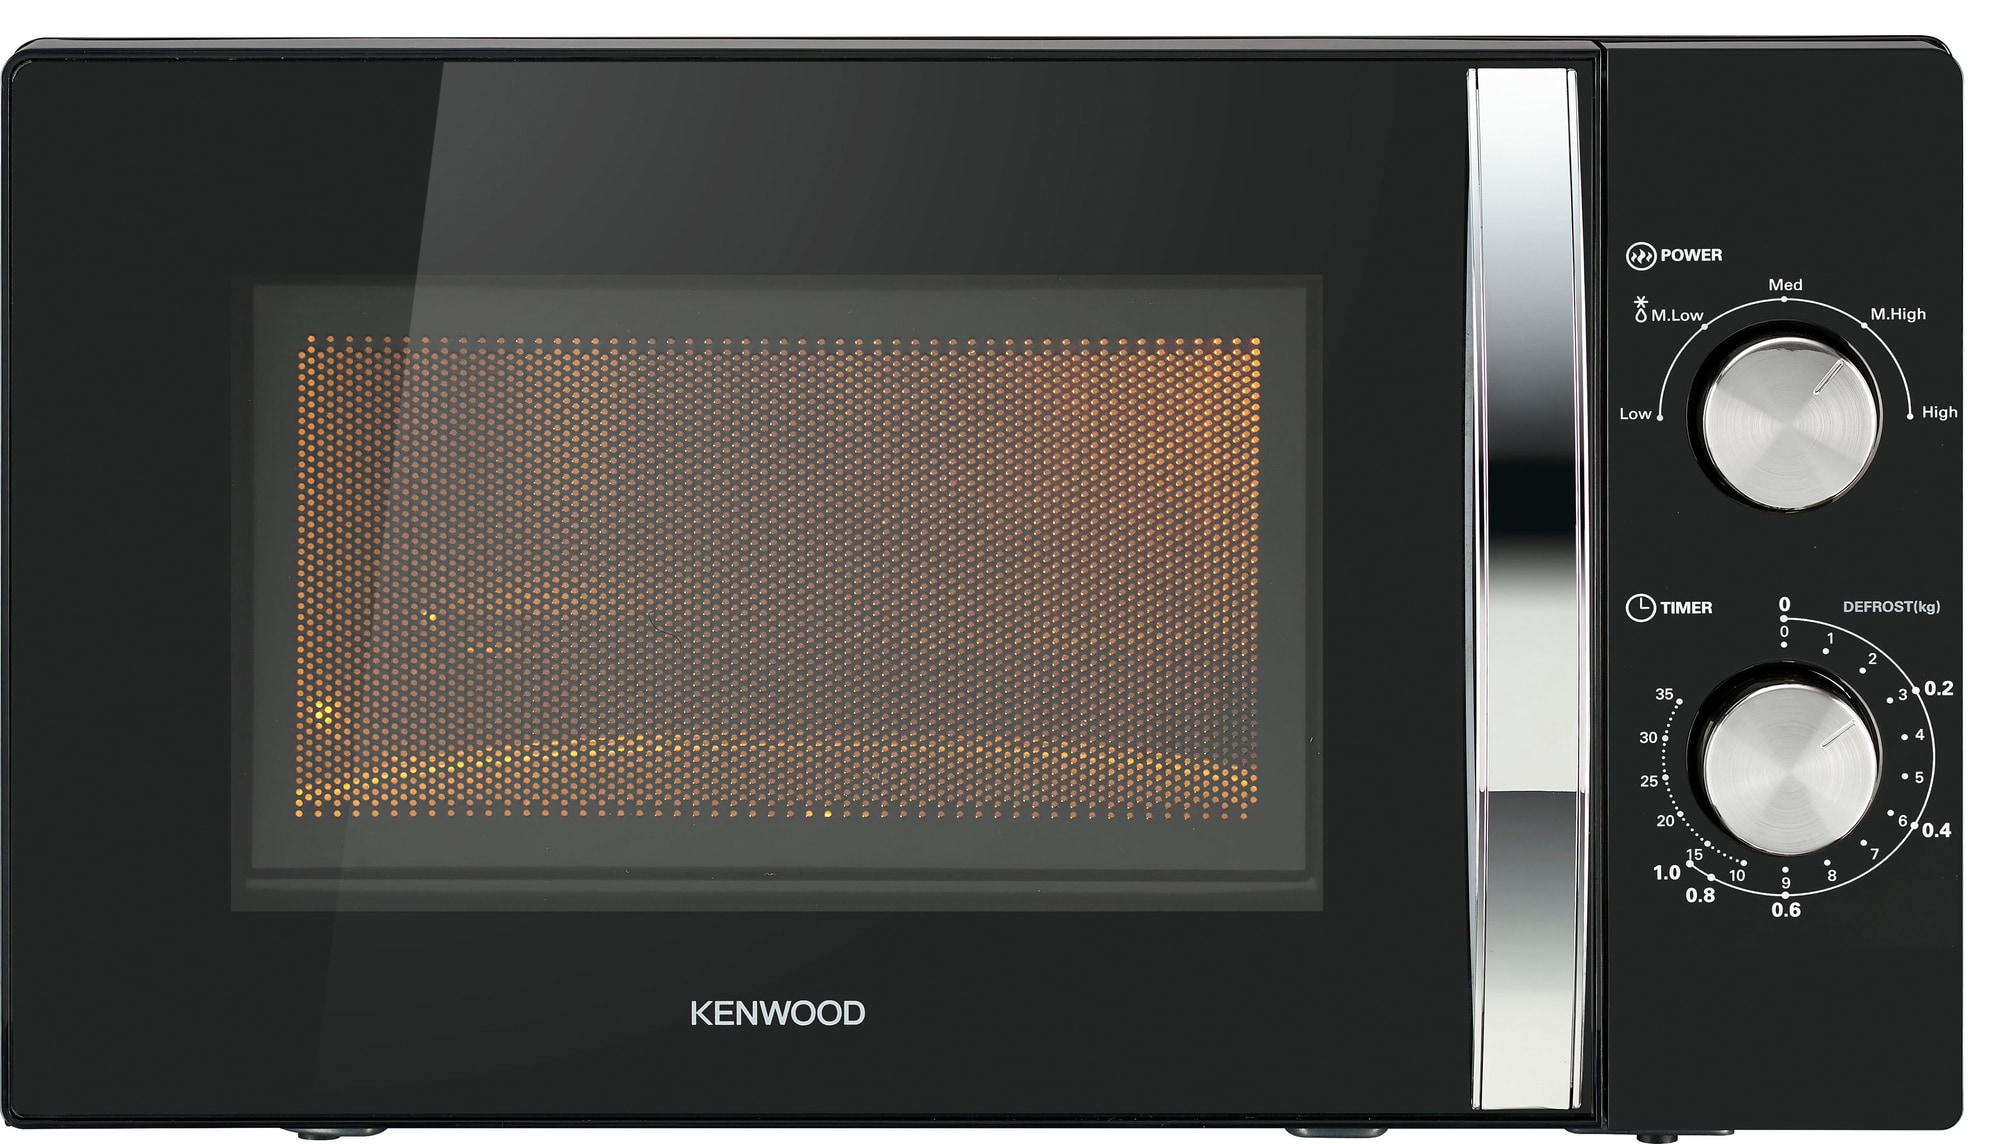 4: Kenwood mikroovn K20MB21E (sort)